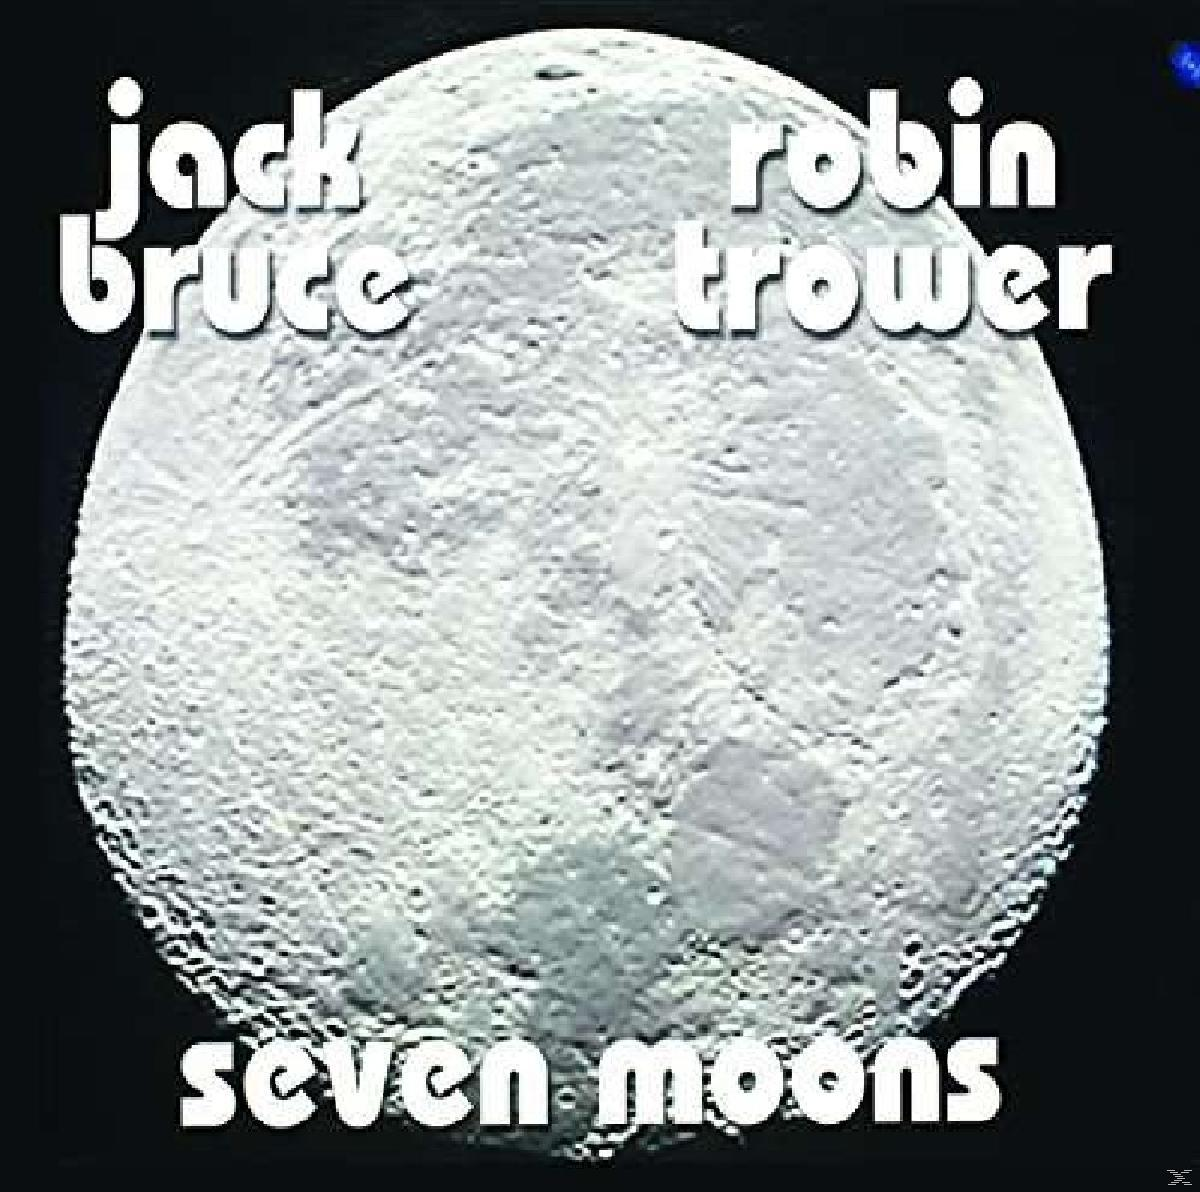 Jack Bruce, Robin Trower (Vinyl) Seven - Moons 